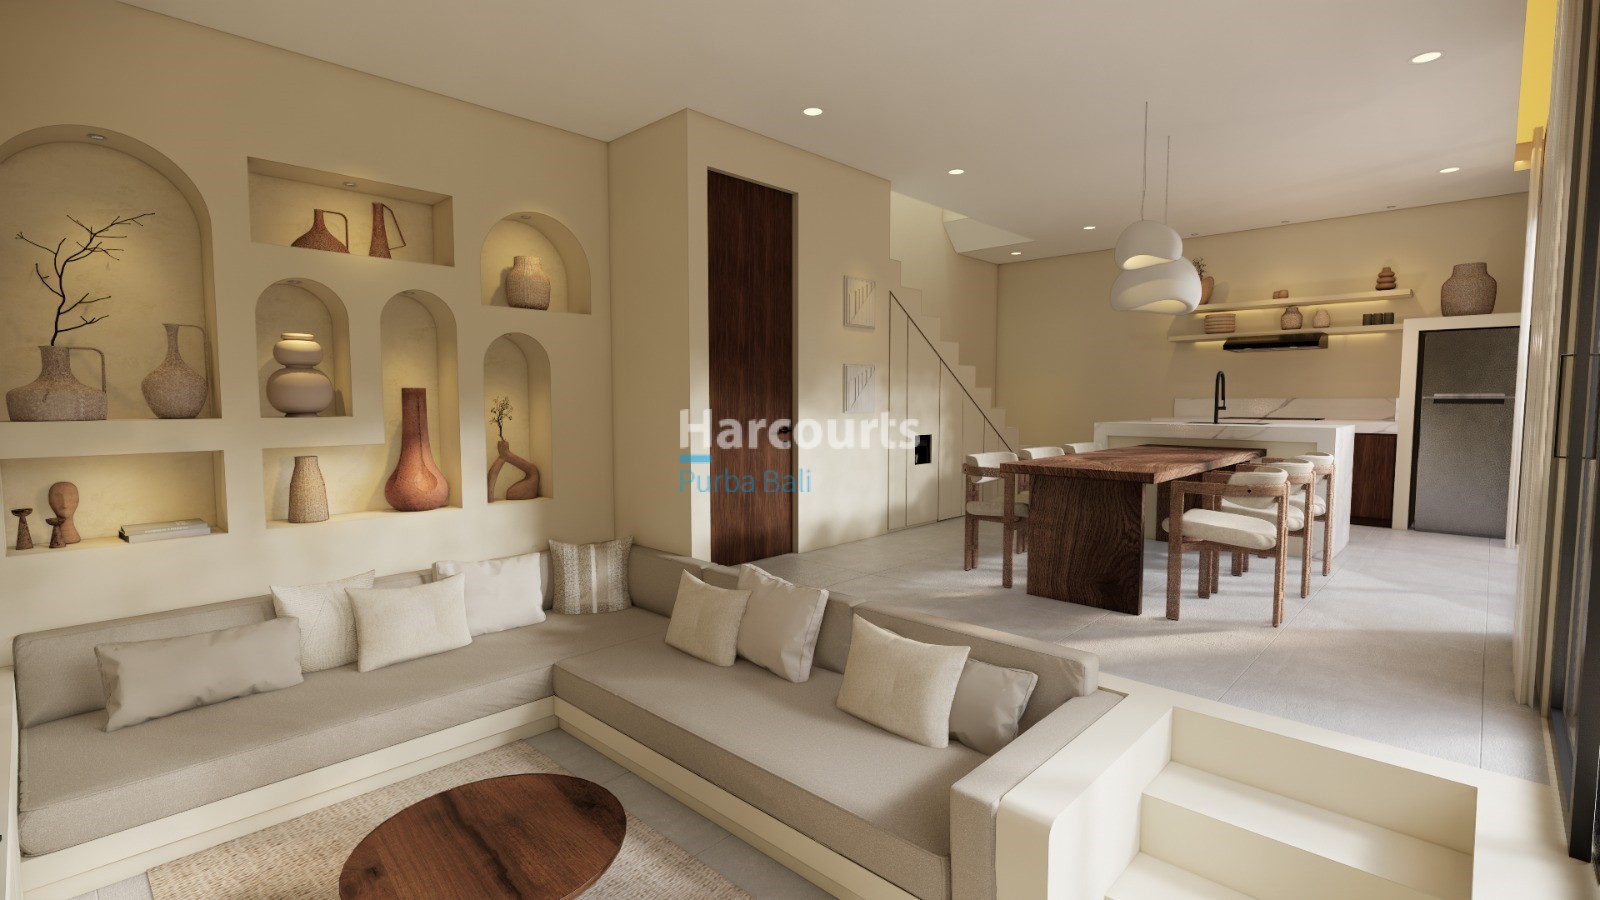 Invest in Batu Bolong Villa Bali - Fully Furnished, Turn-Key, Hassle Free!